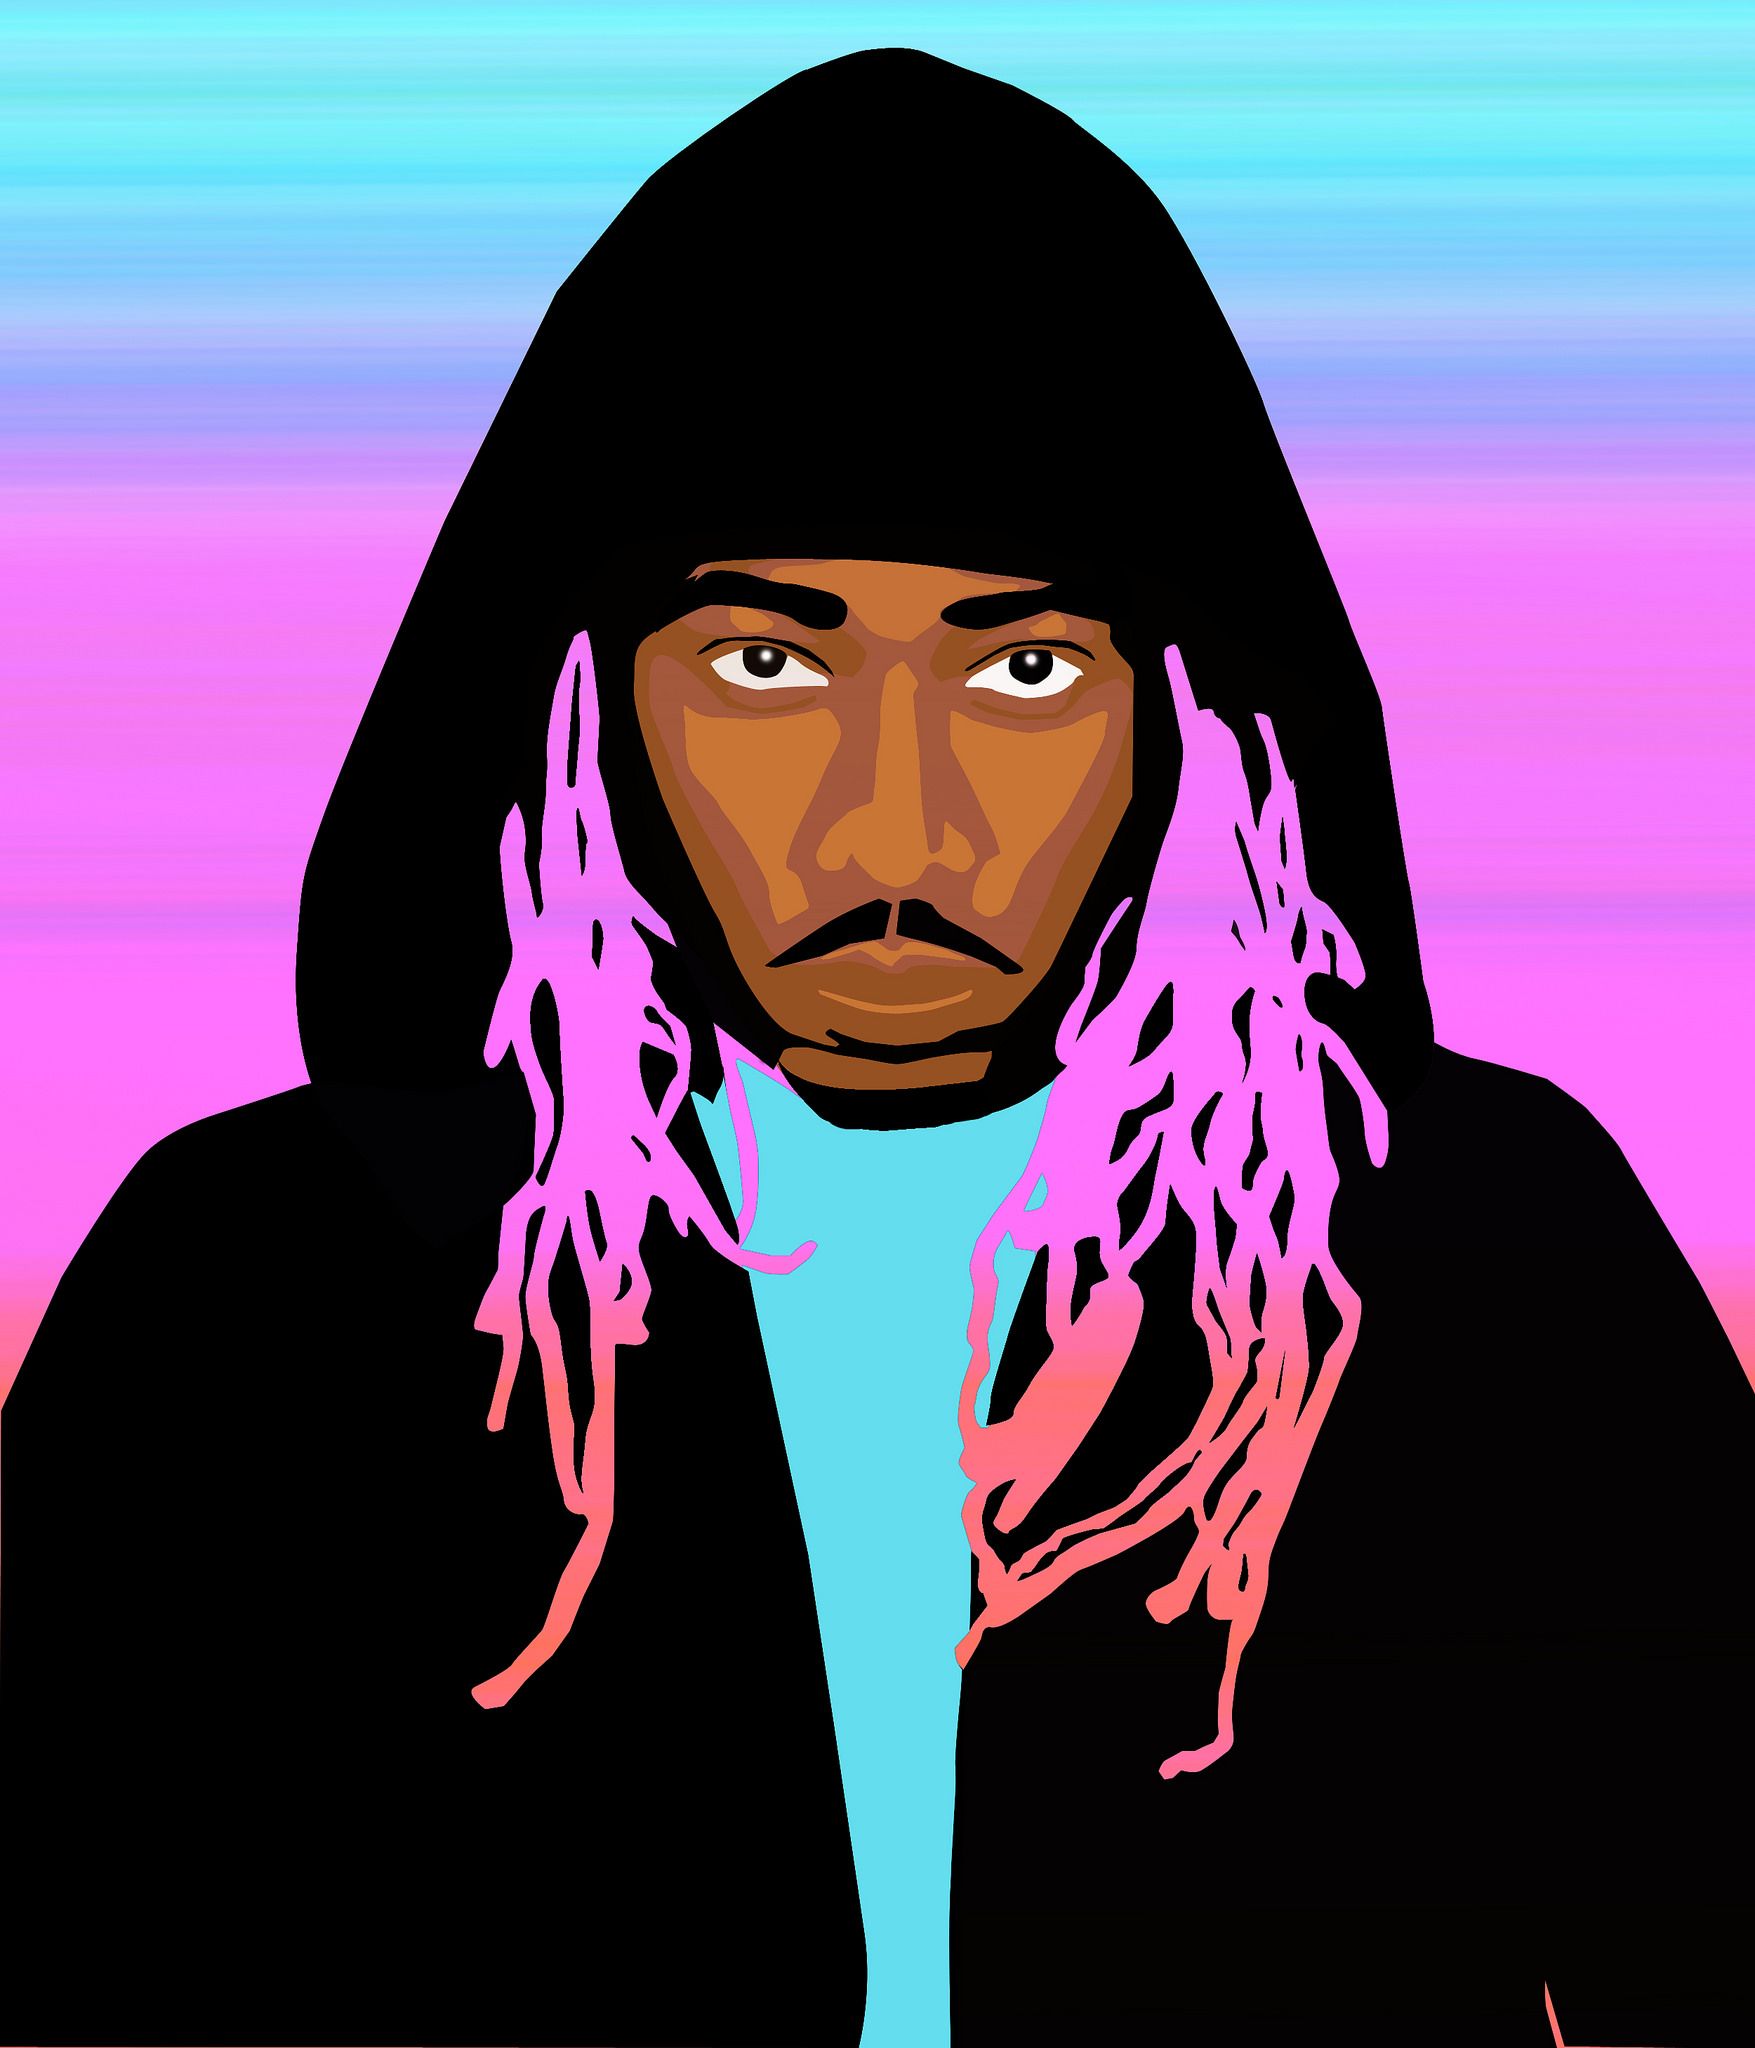 Future [rapper] Cartoon In 2019 - Future Rapper Cartoon , HD Wallpaper & Backgrounds